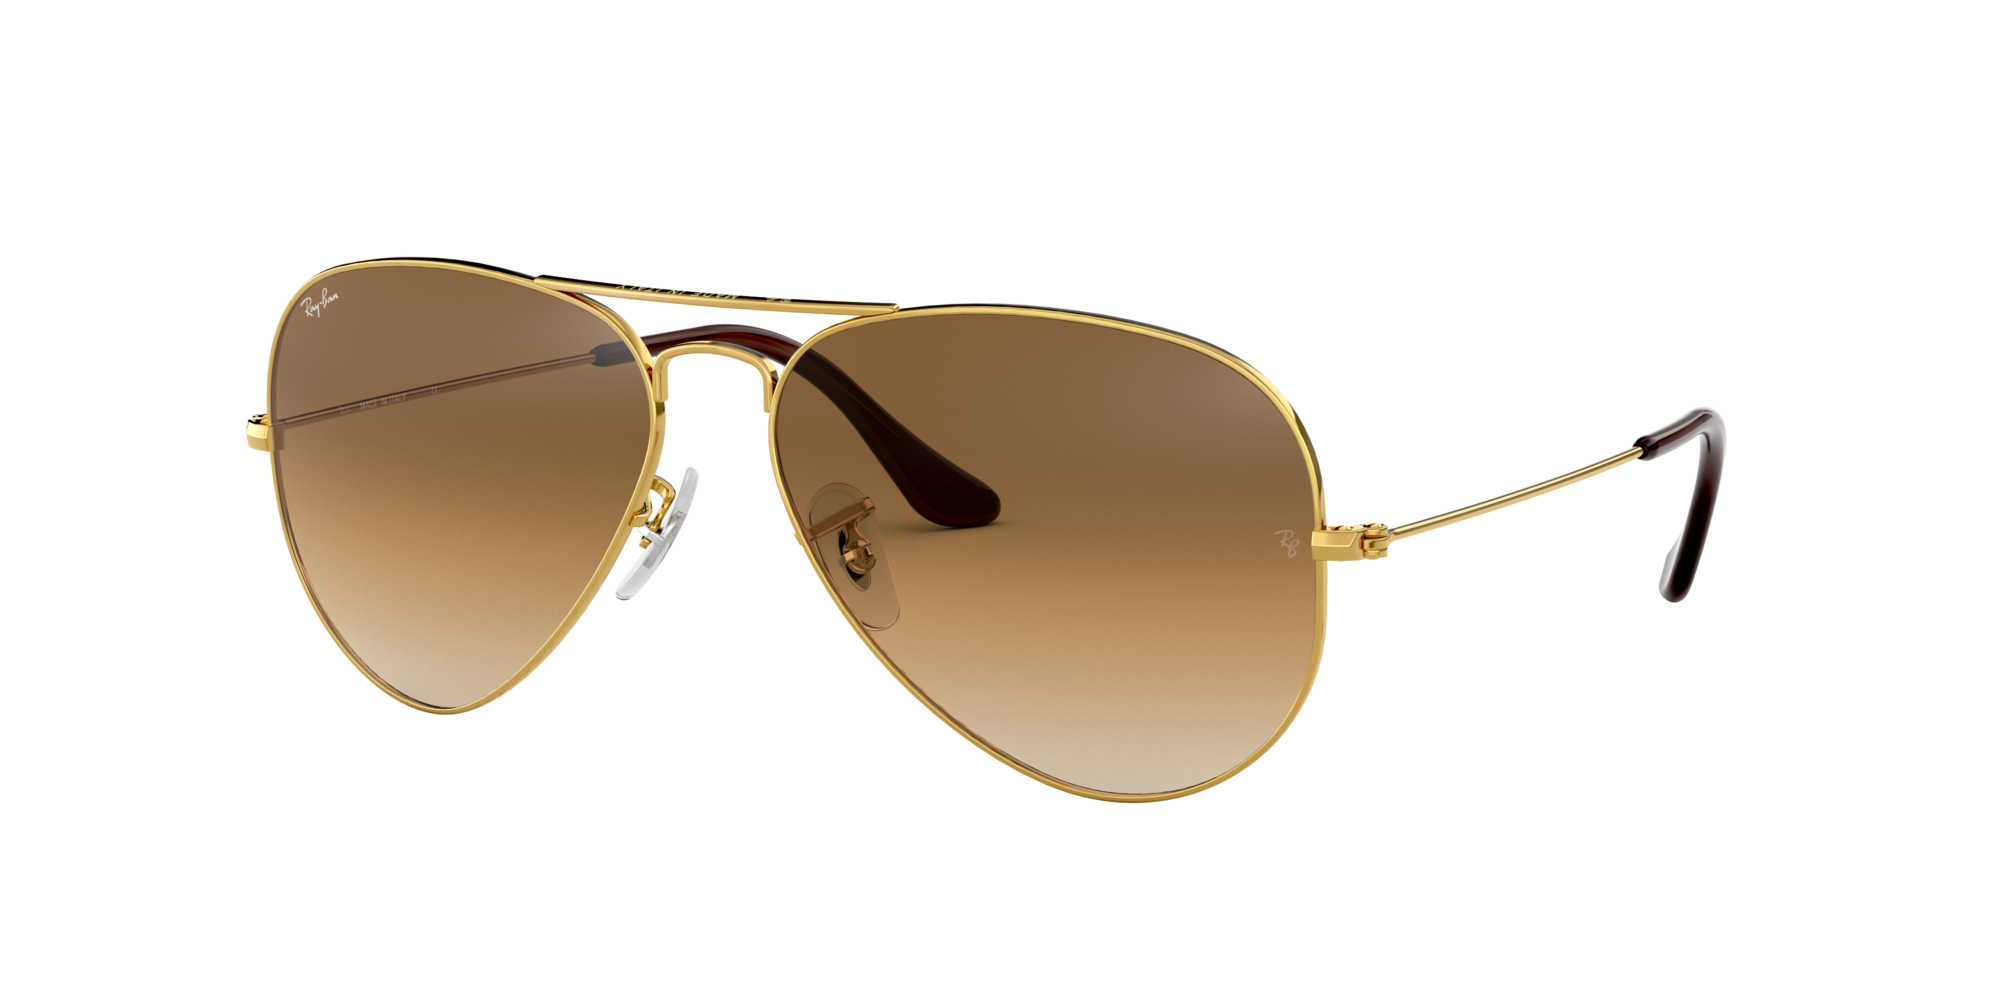 ray ban 0rb3025 aviator sunglasses